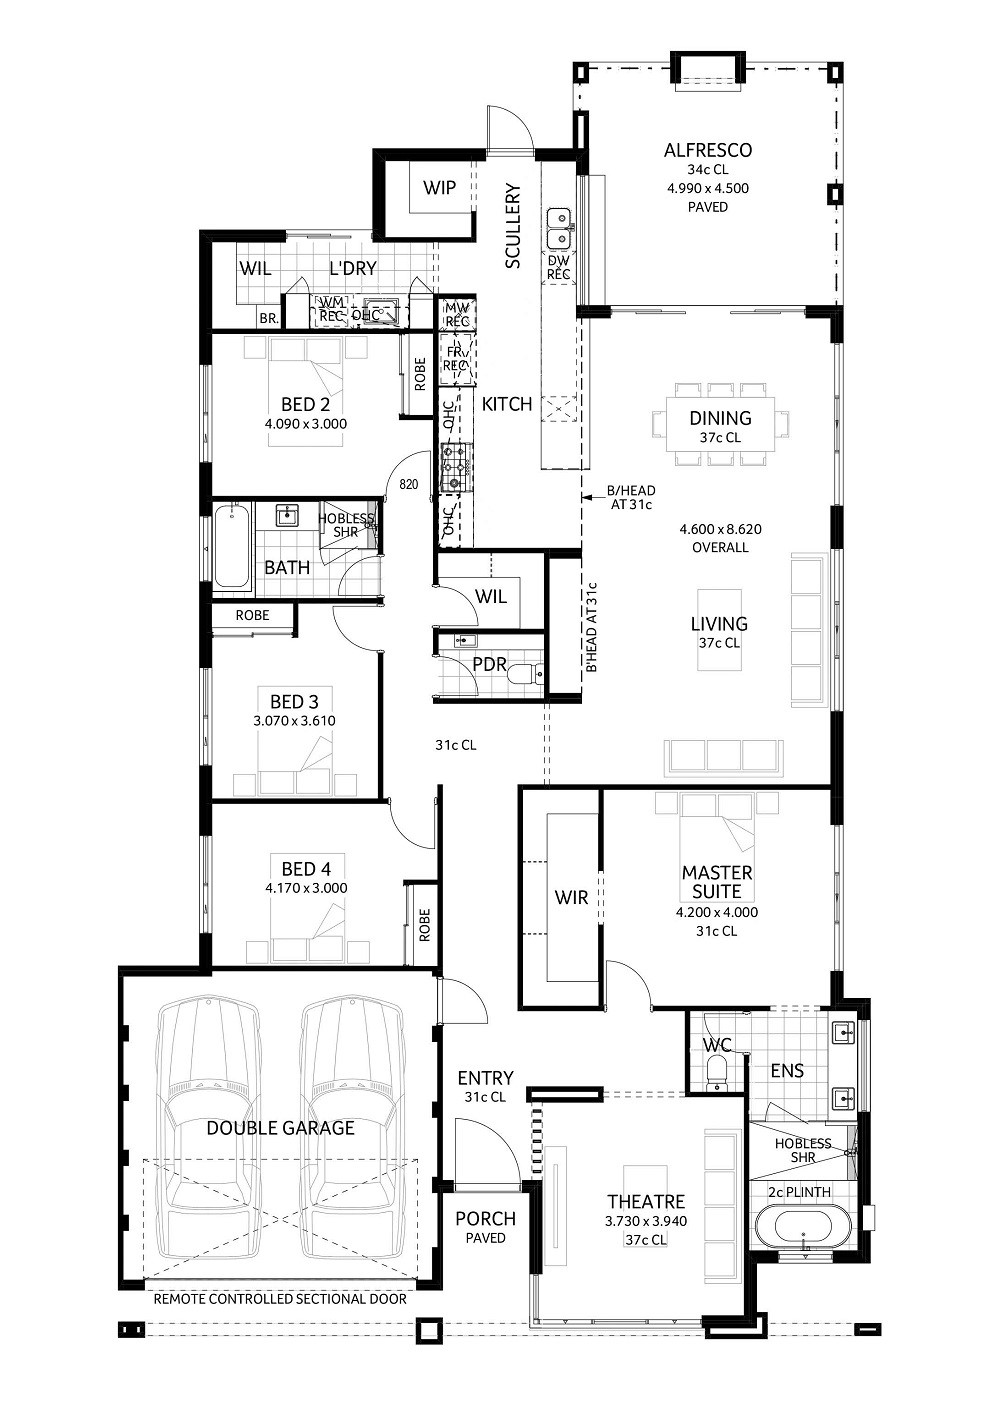 Plunkett Homes Ambergate Vasse House and Land Packages floorplan 1000x1400